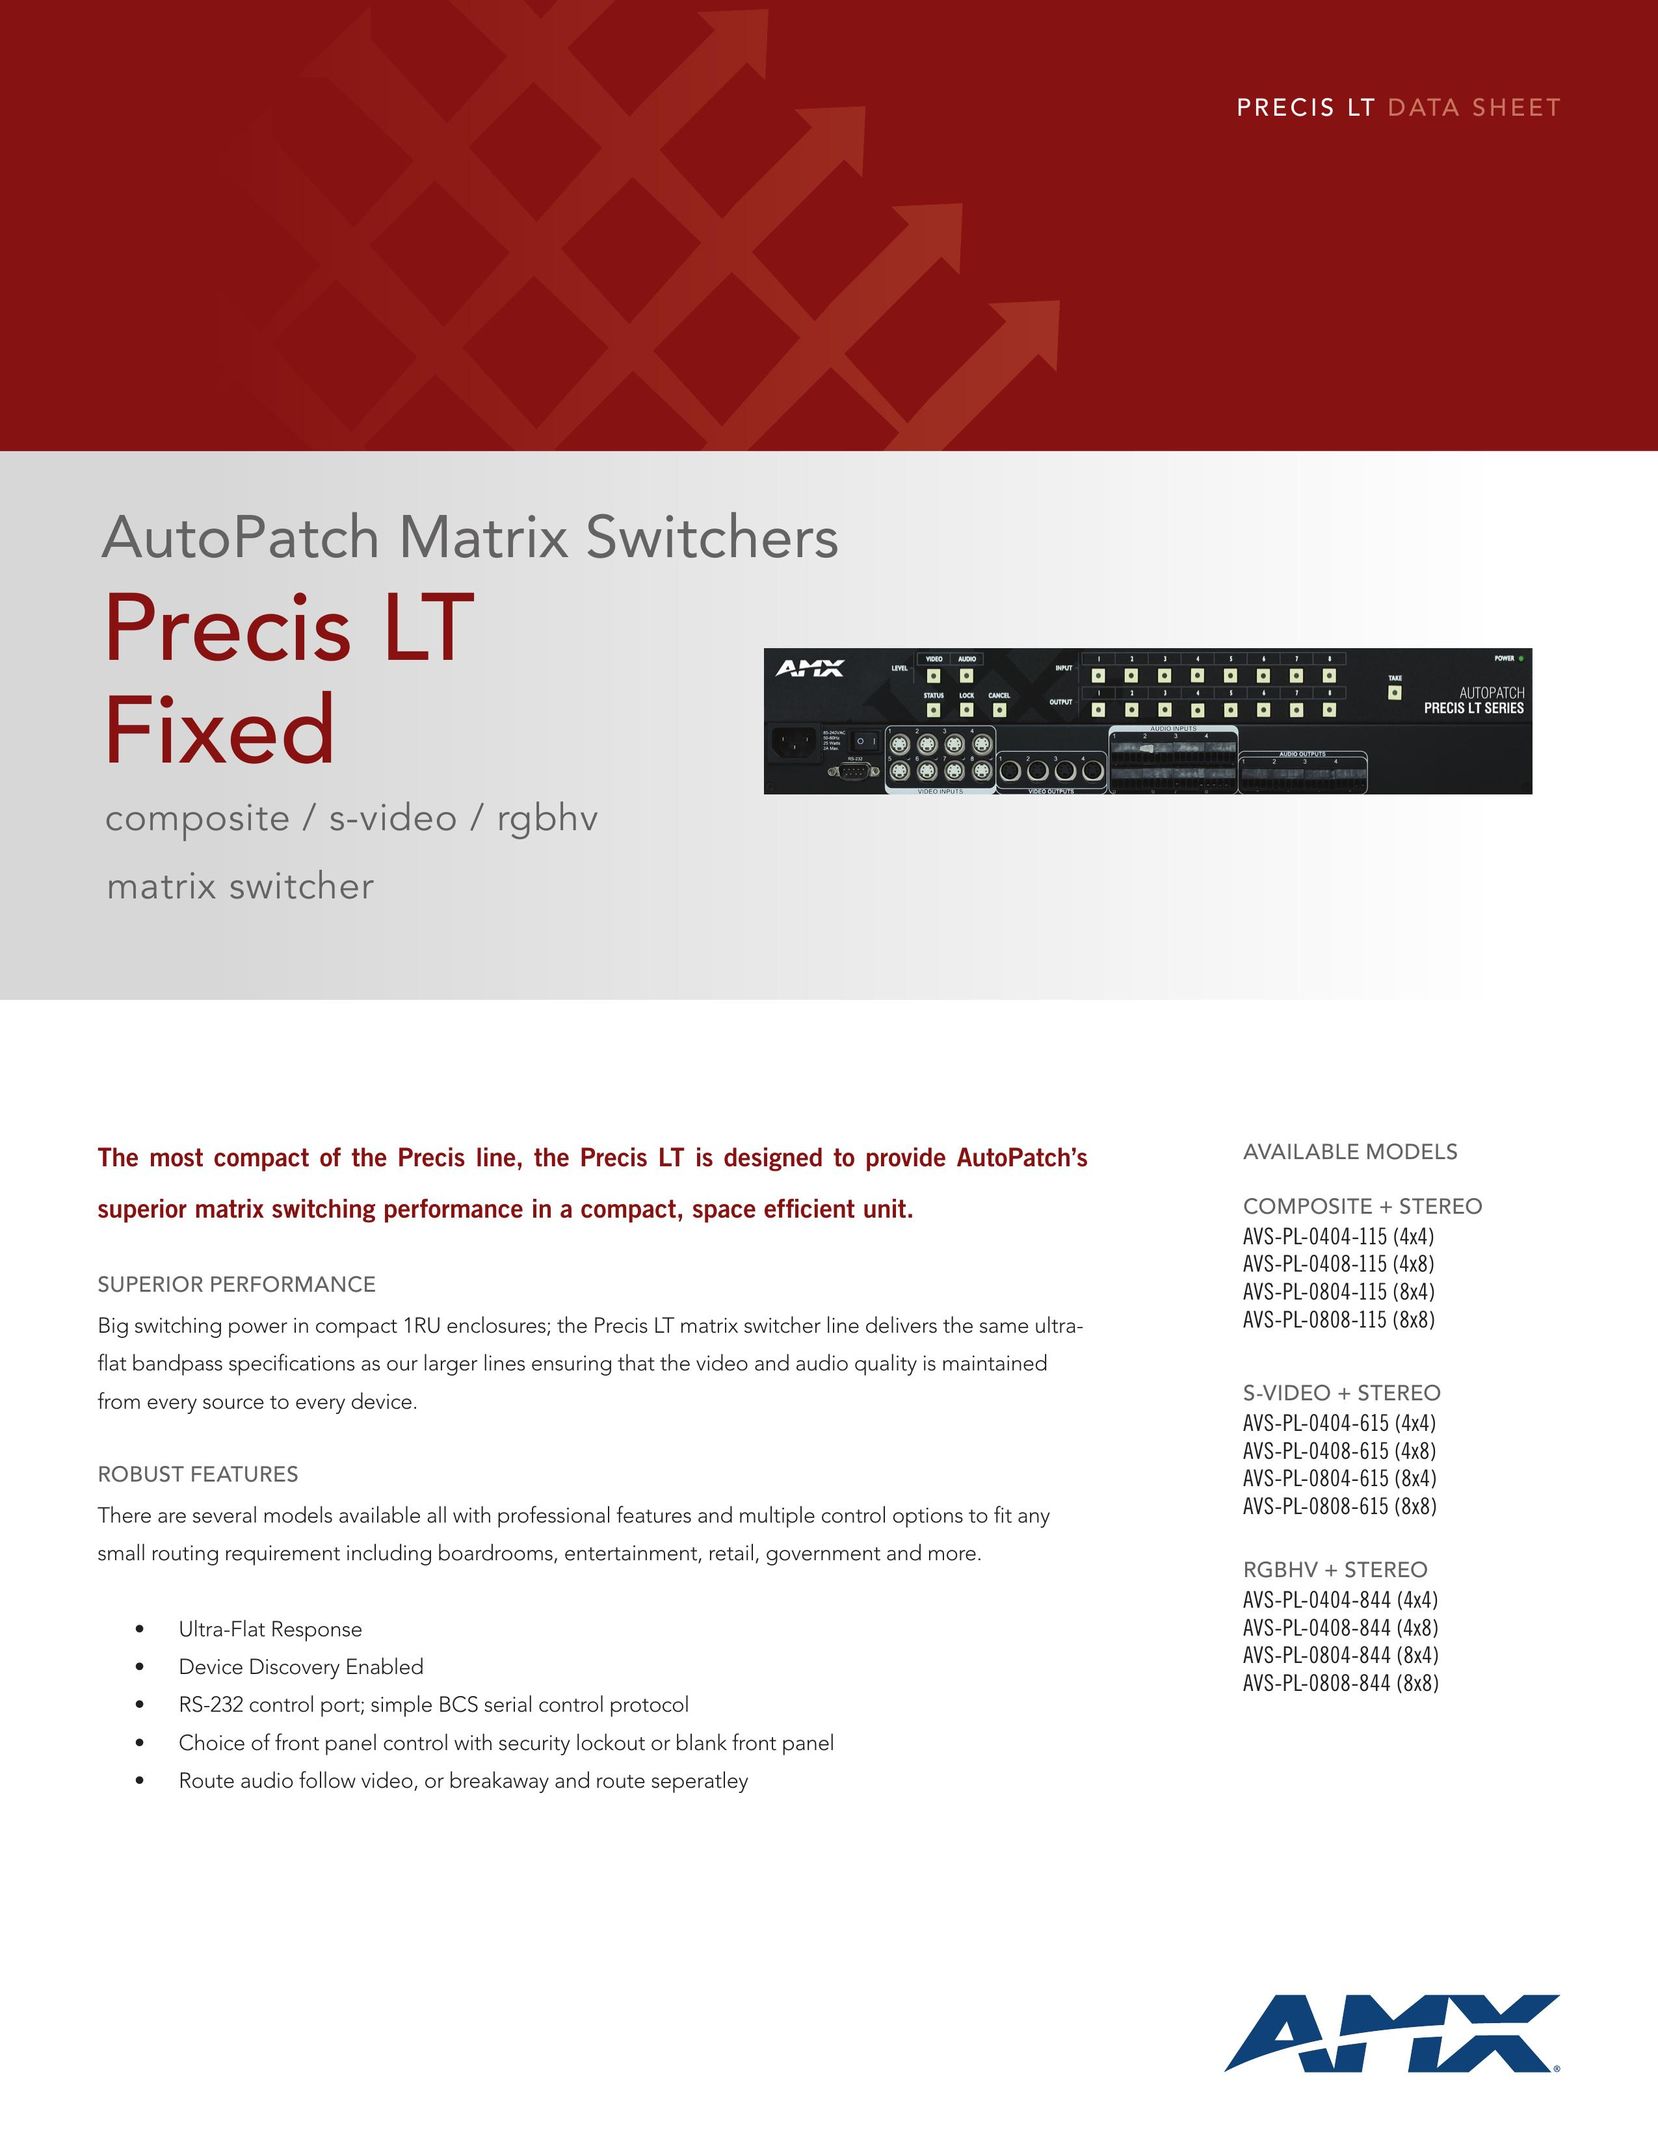 AMX AVS-PL-0404-615 Switch User Manual